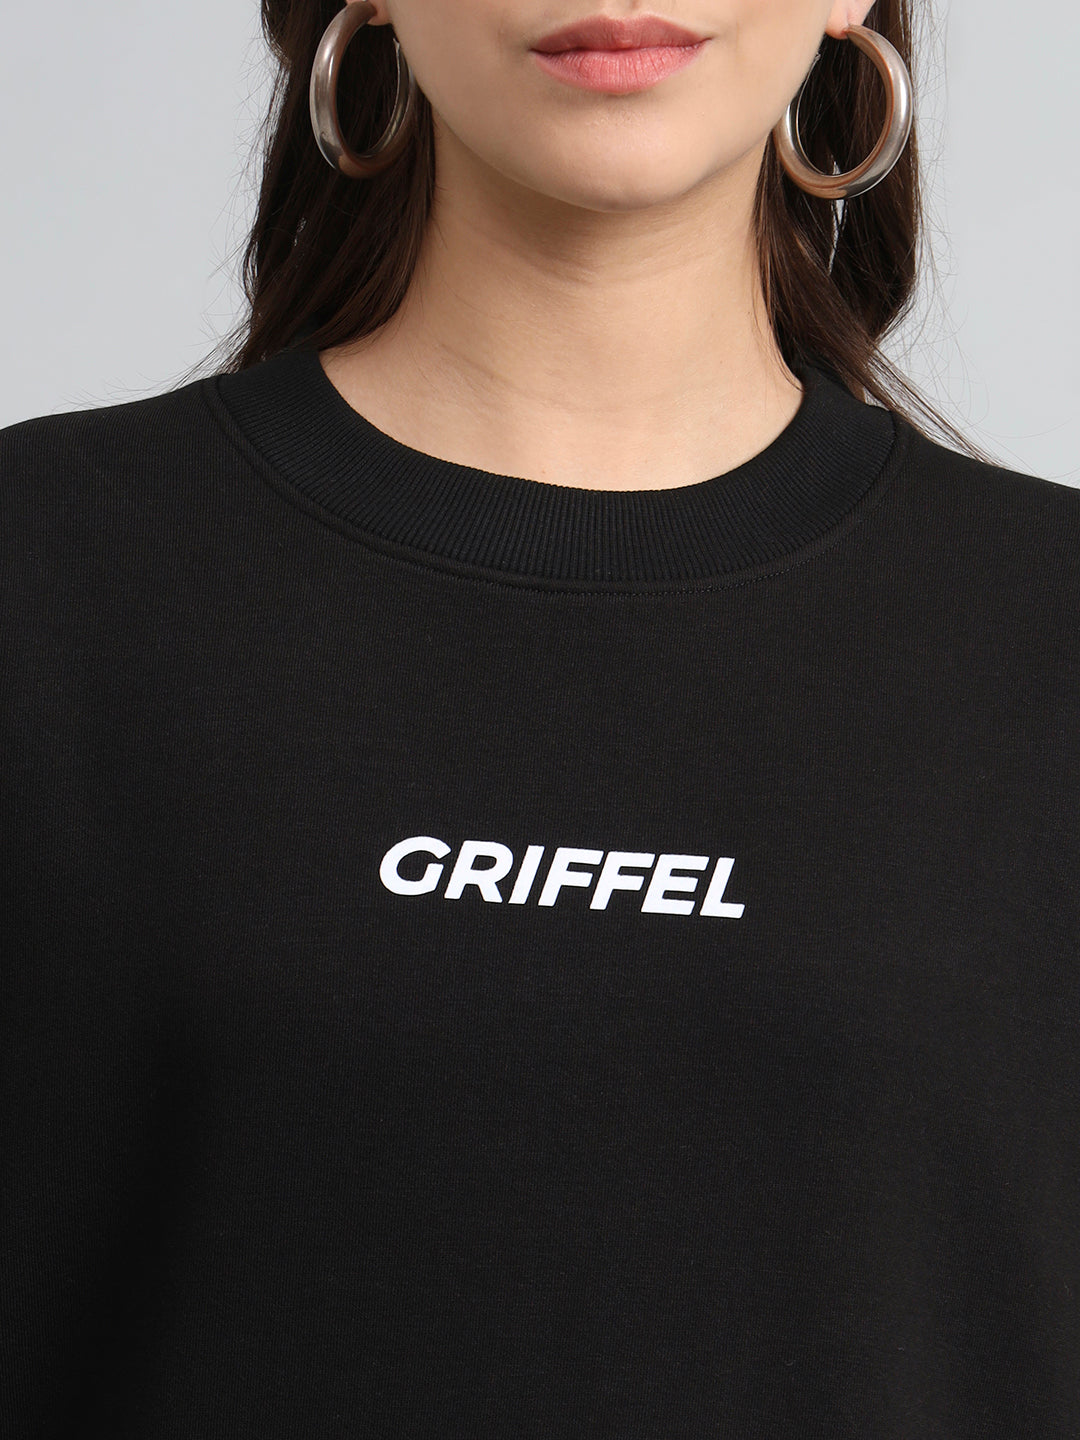 Griffel Women Oversized Fit Typography Print Round Neck 100% Cotton Fleece Black Tracksuit - griffel